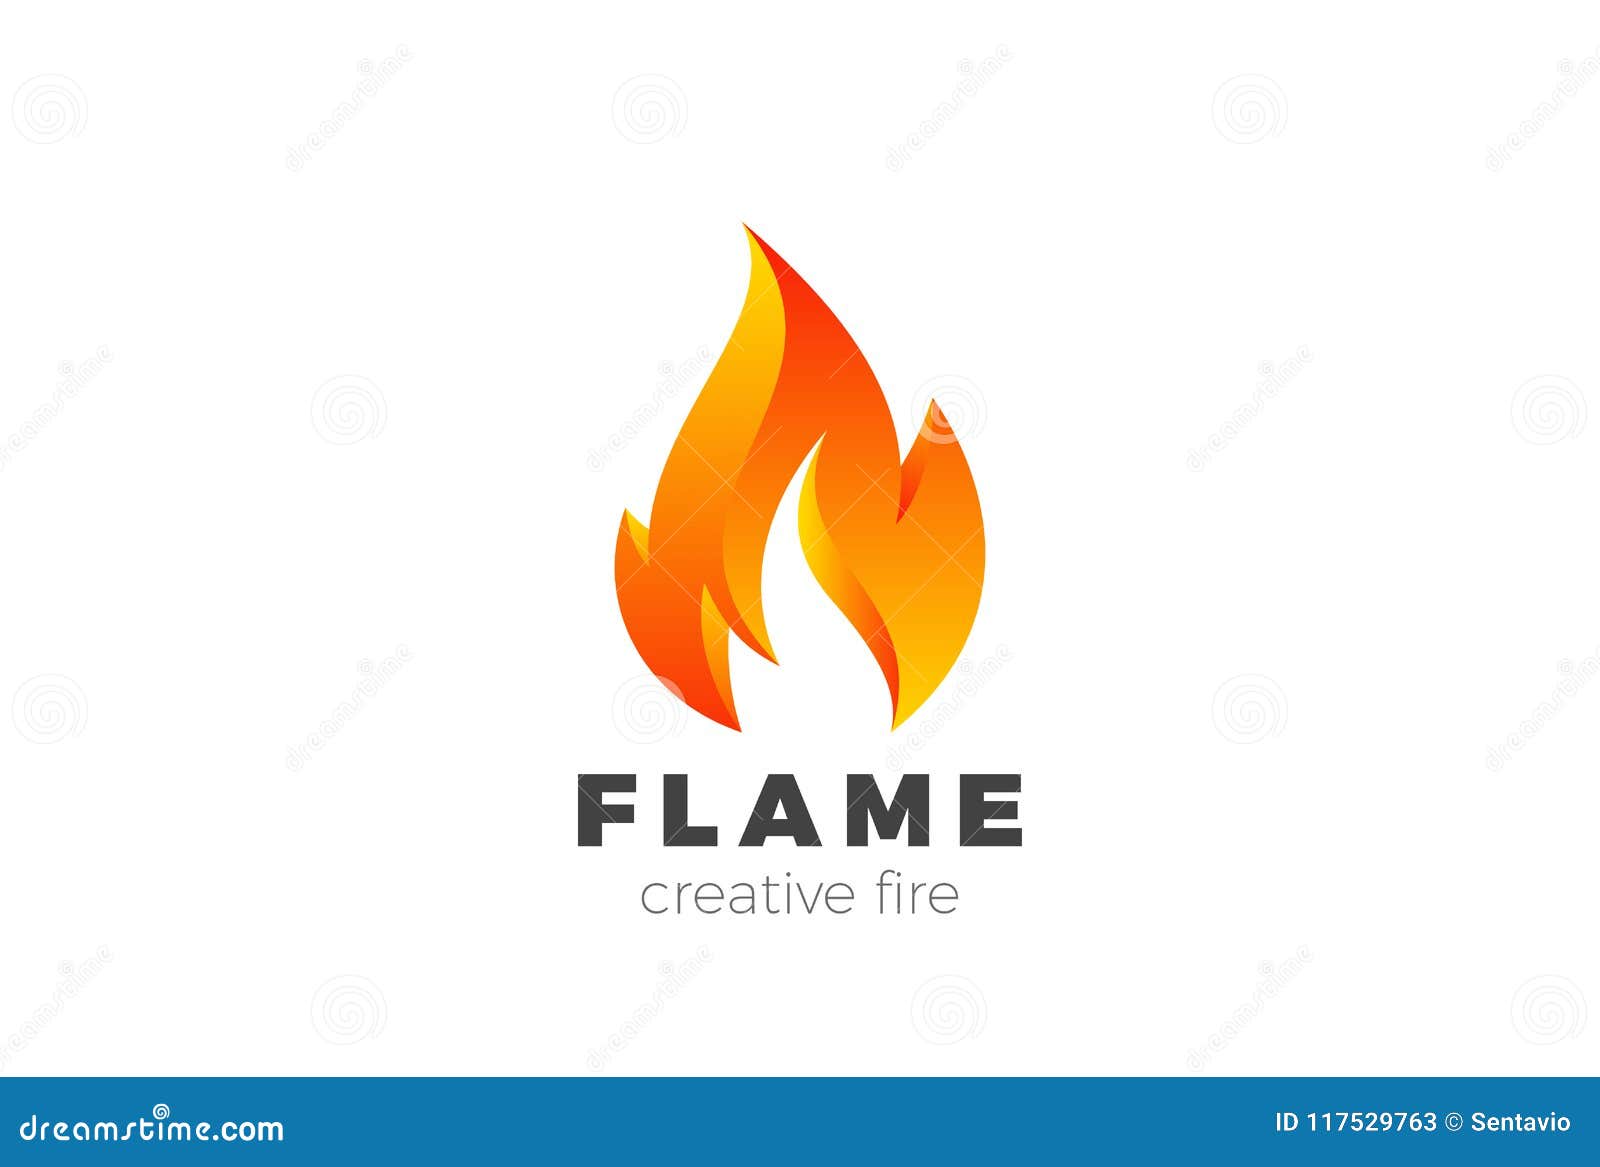 Fotos de Logomarca fogo, Imagens de Logomarca fogo sem royalties